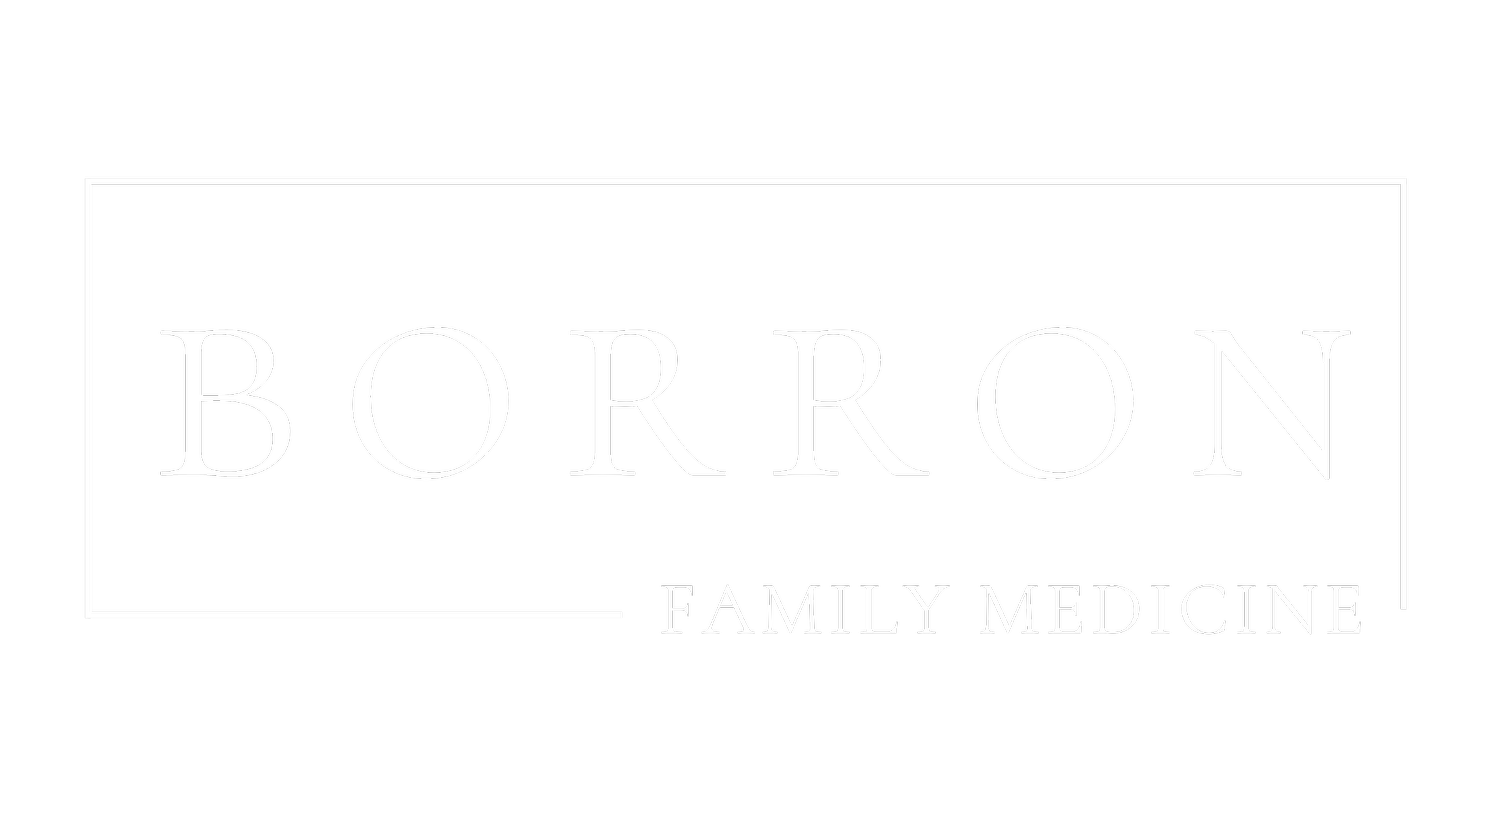 Borron Family Medicine Meridan